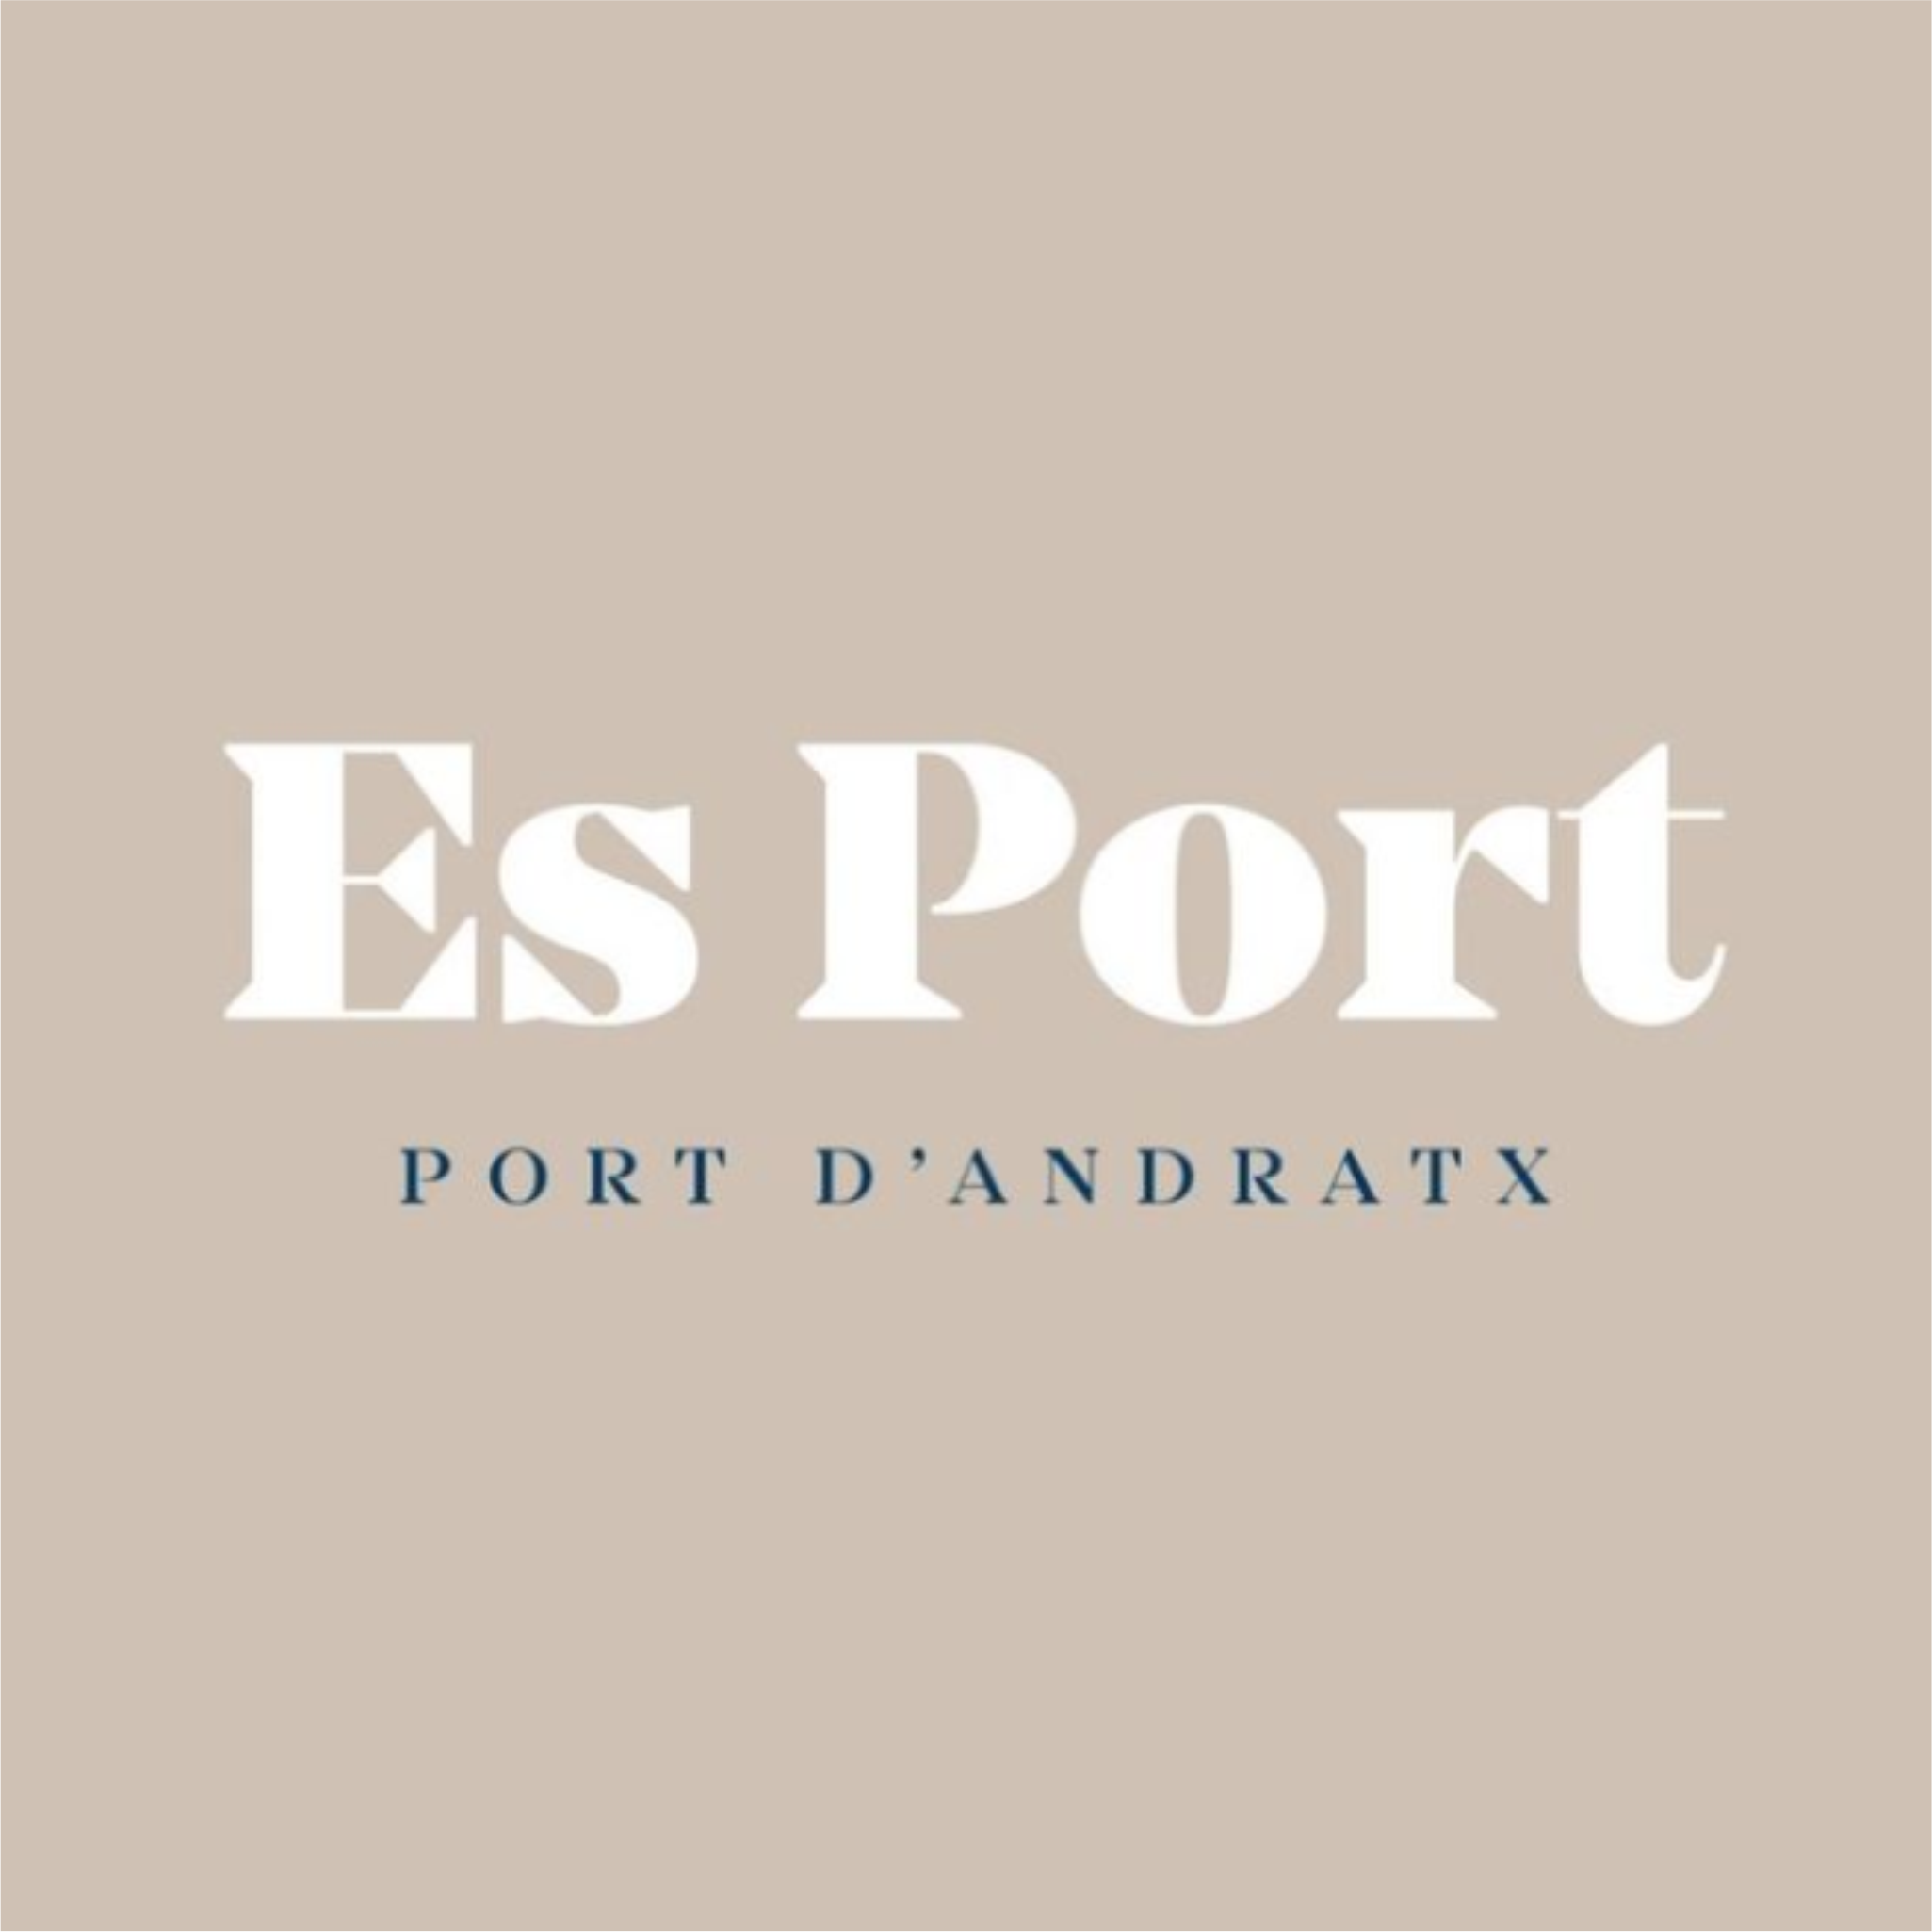 Es Port